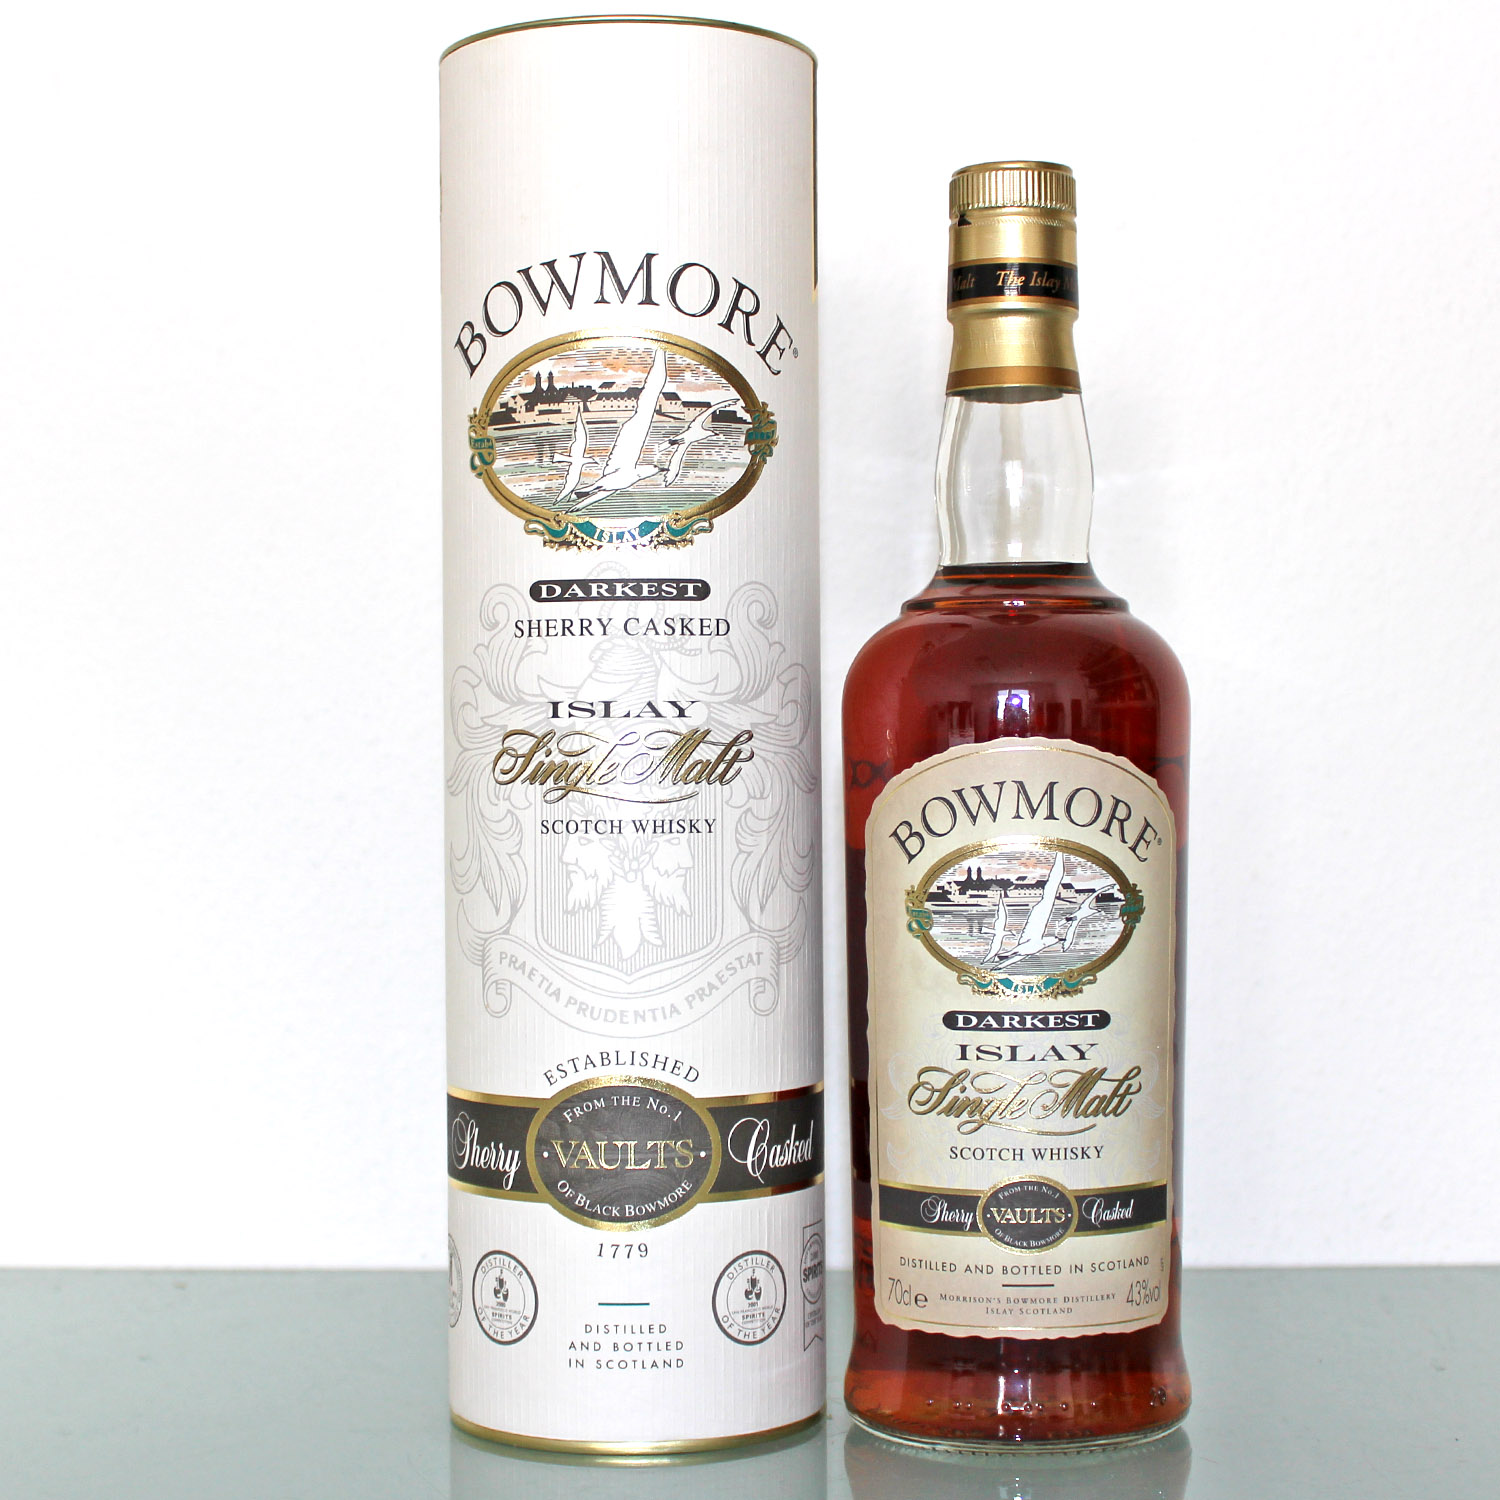 Bowmore Darkest Sherry Casked Single Malt Scotch Whisky